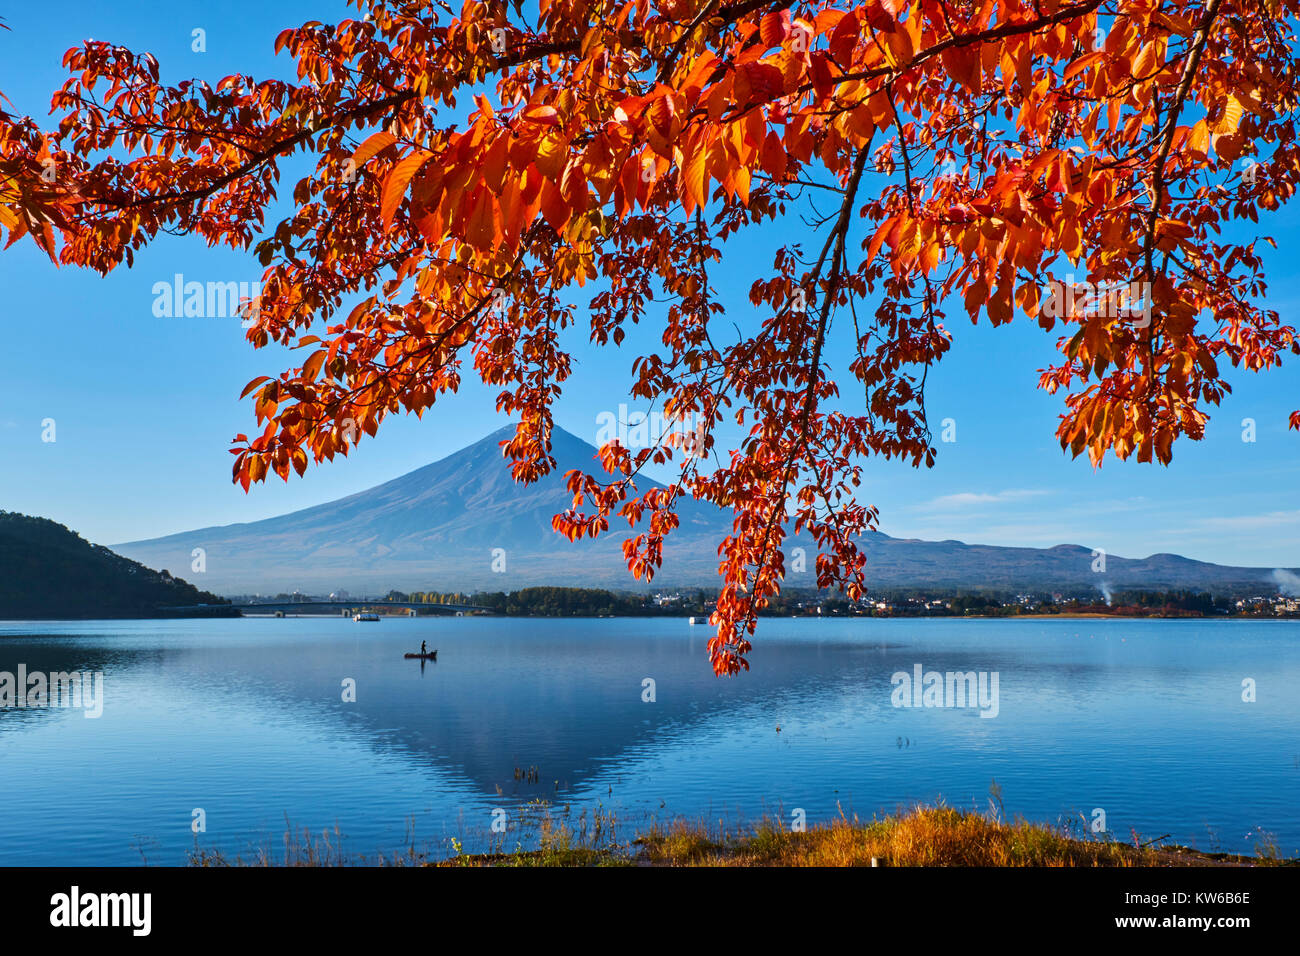 Japan, Honshu, Shizuoka, Fujiyoshida, Kawaguchiko lake and Mount Fuji in autumn colour Stock Photo